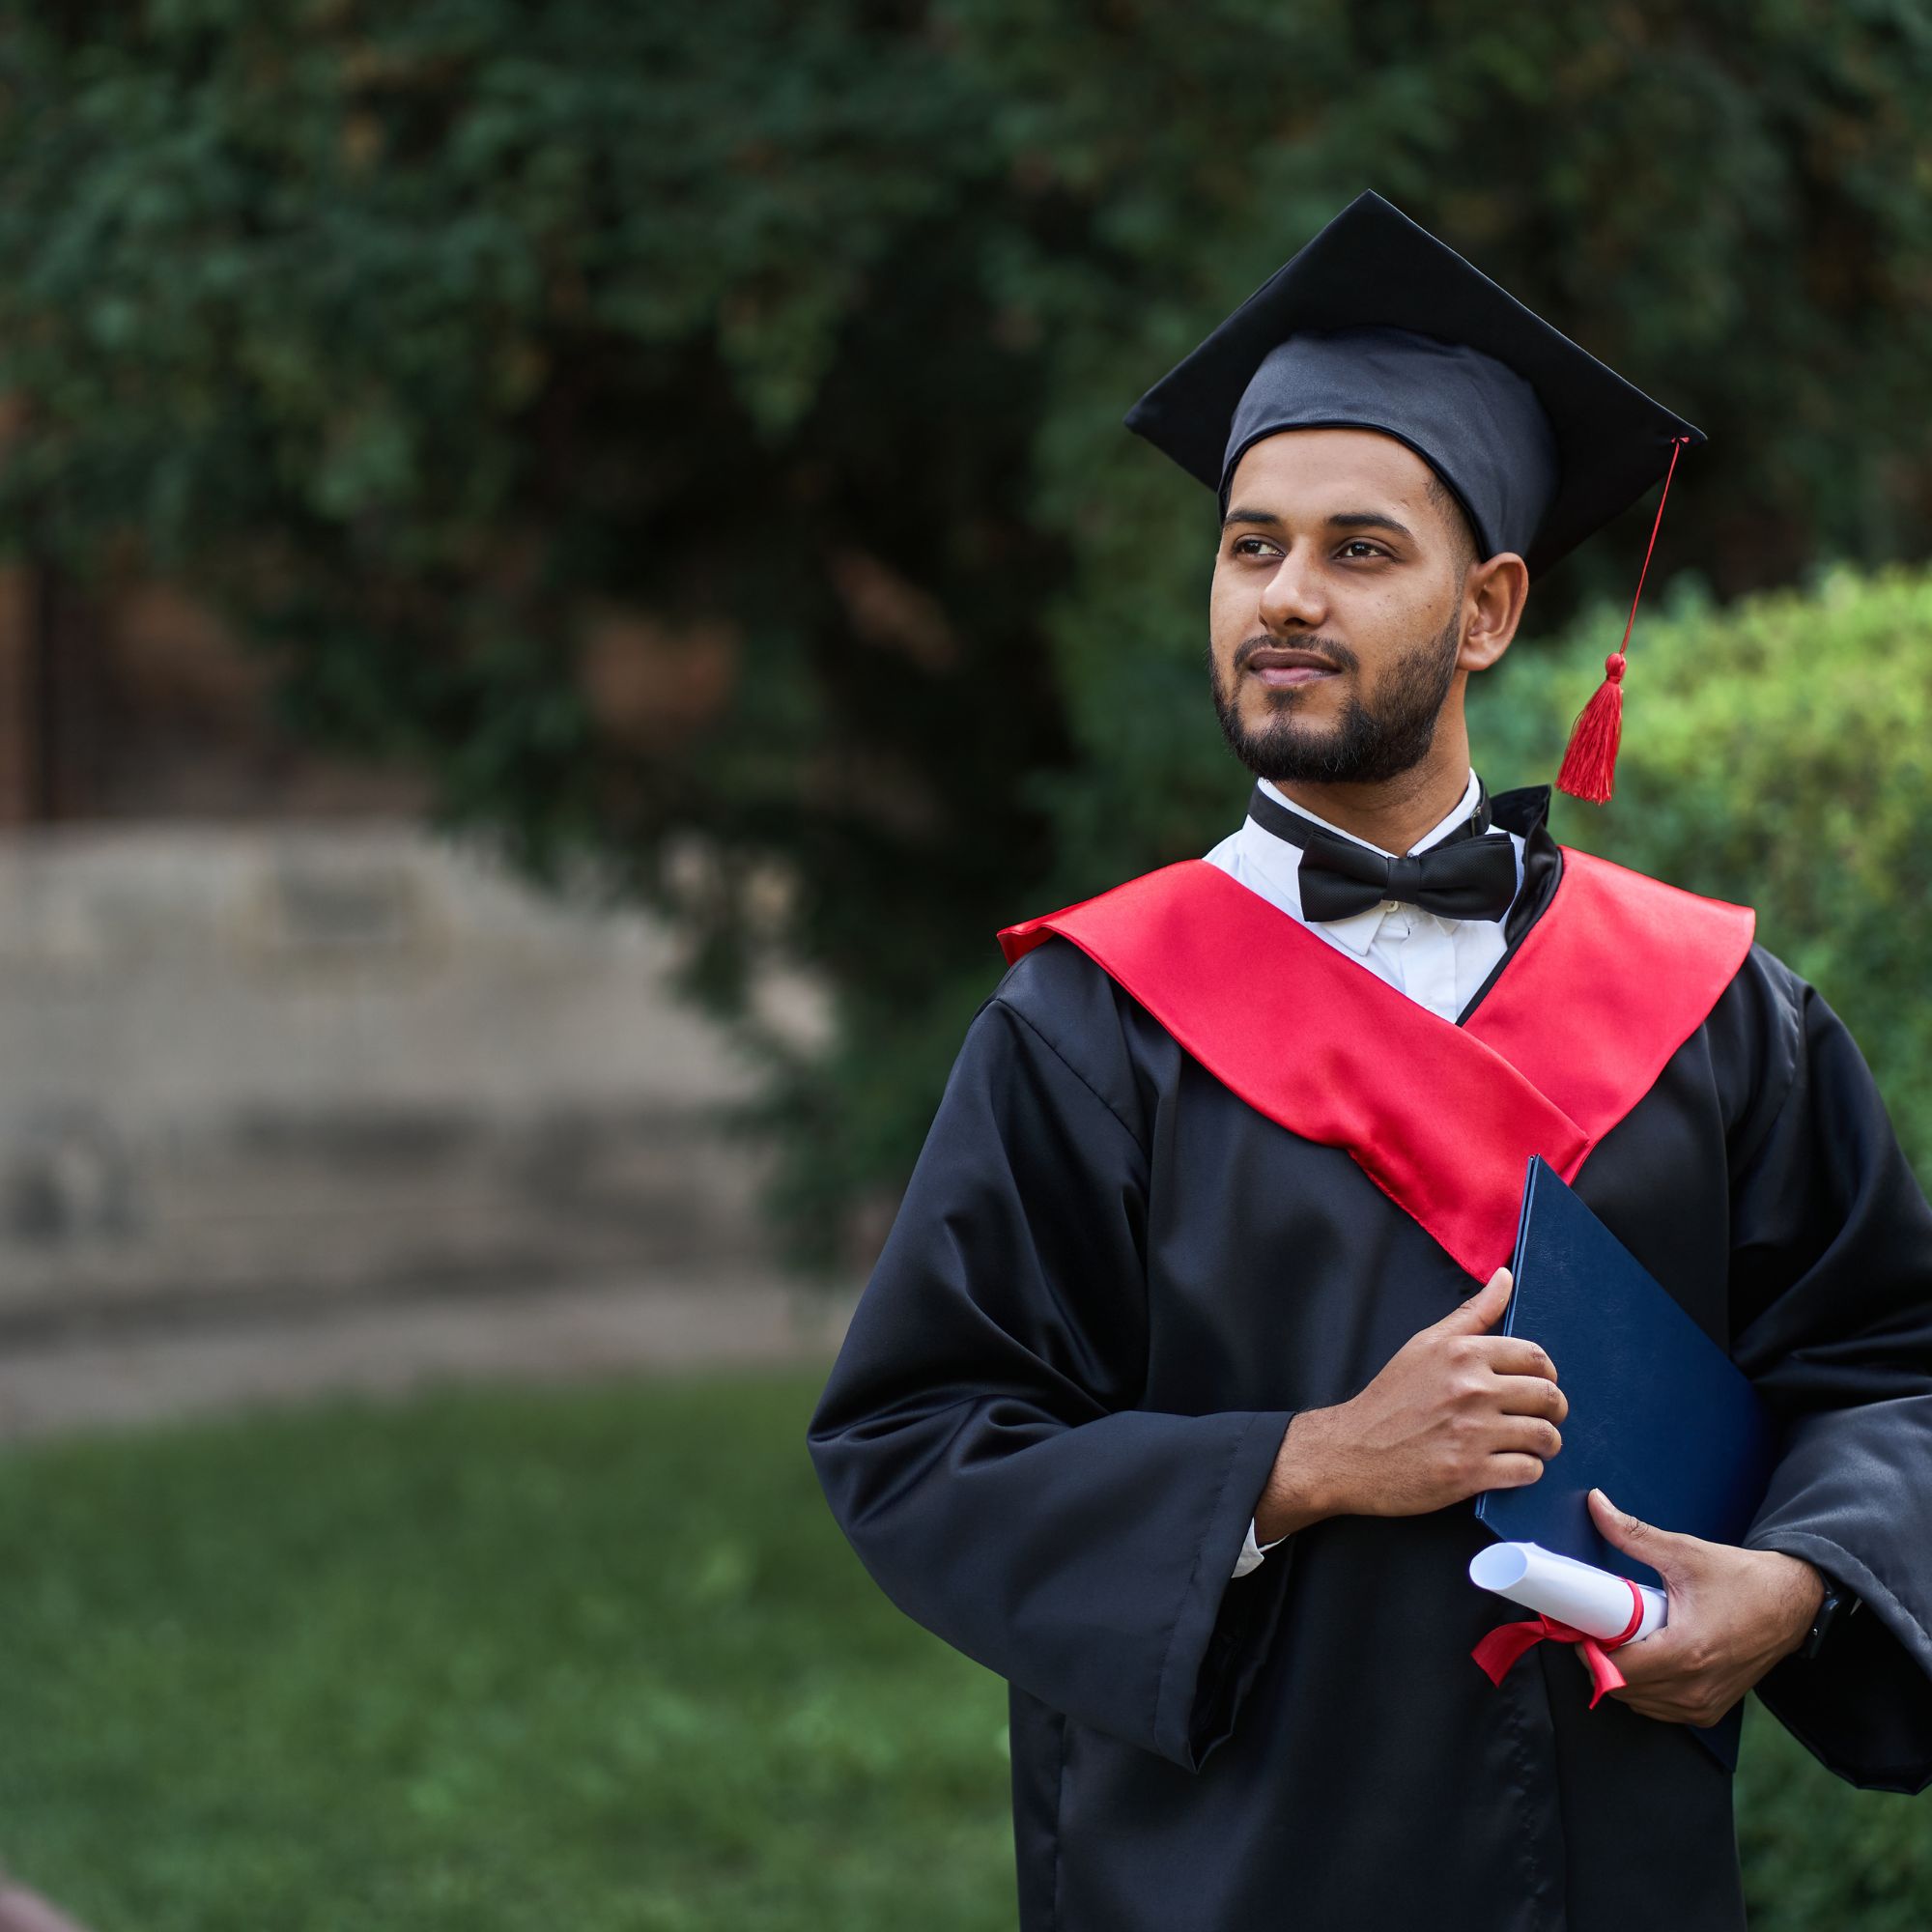 Free Photo | International graduates from celebrating diplomas in graduation  robes